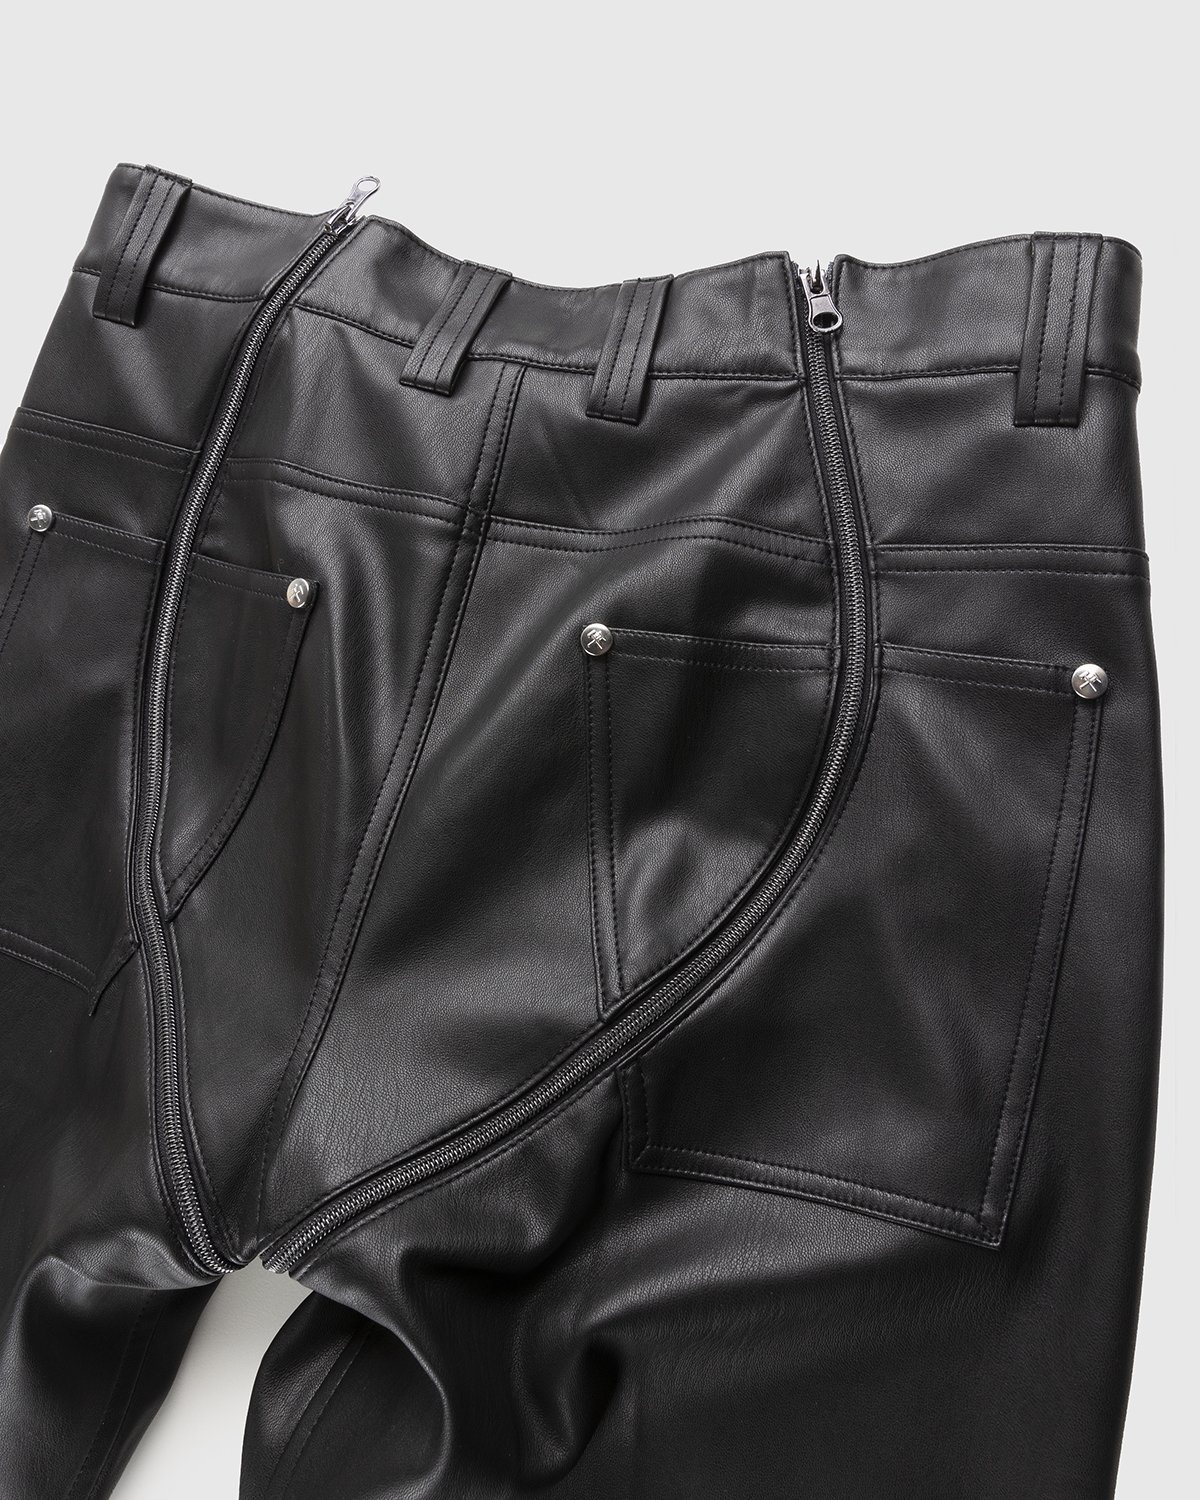 GmbH – Lata Pleather Pants Black - Leather Pants - Black - Image 3